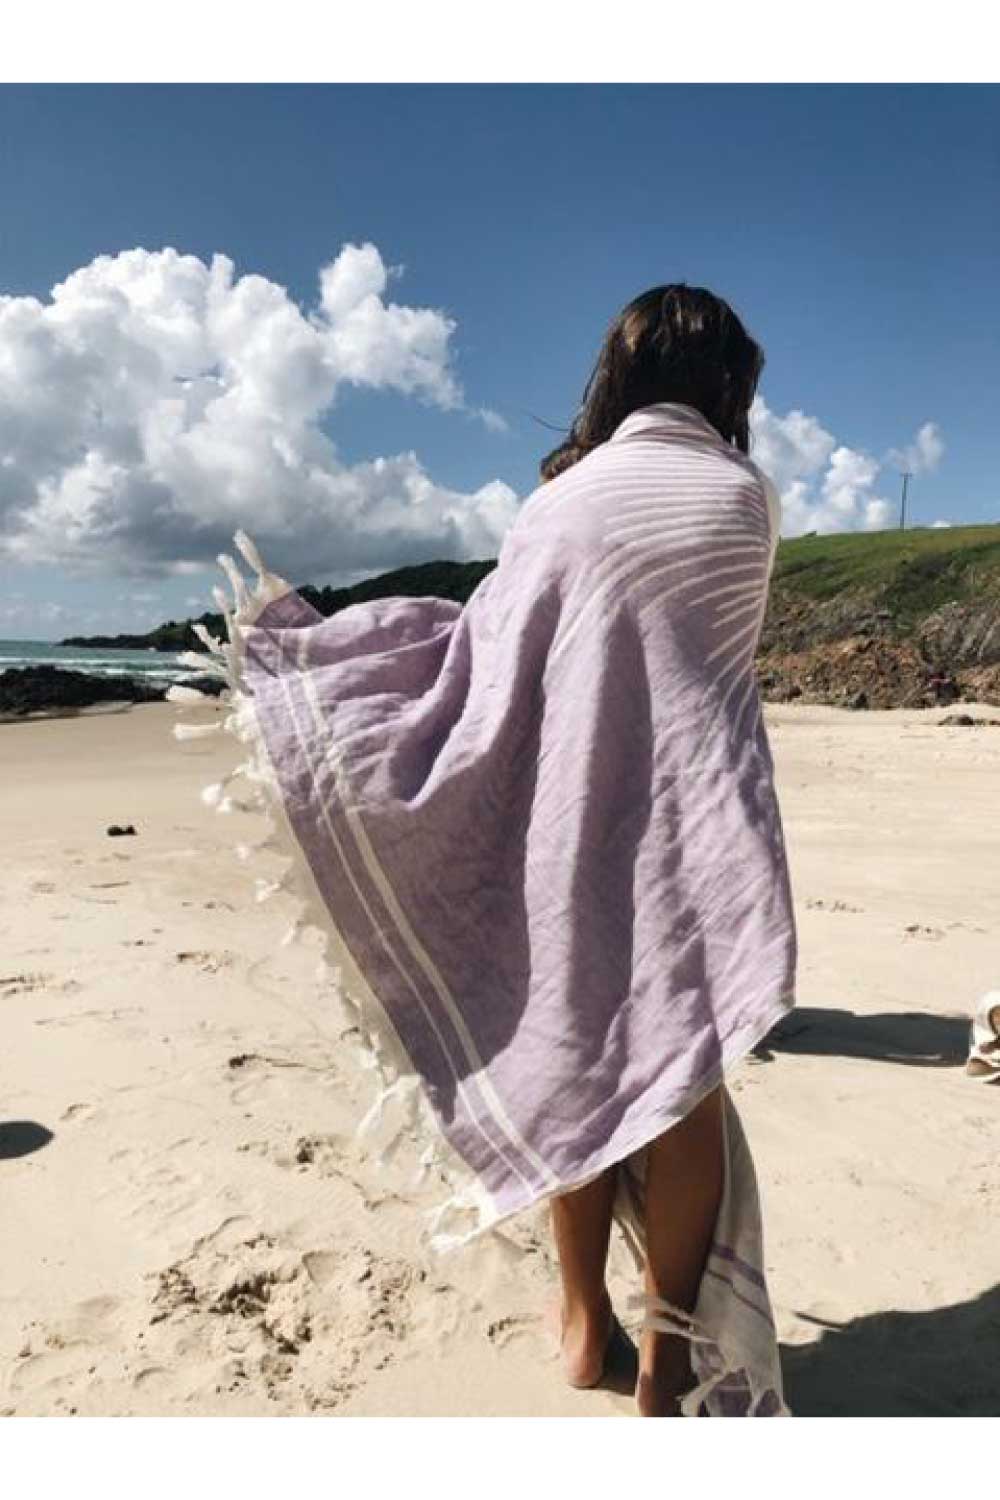 Salty Shadows Jacquard Weave Turkish Beach Towel